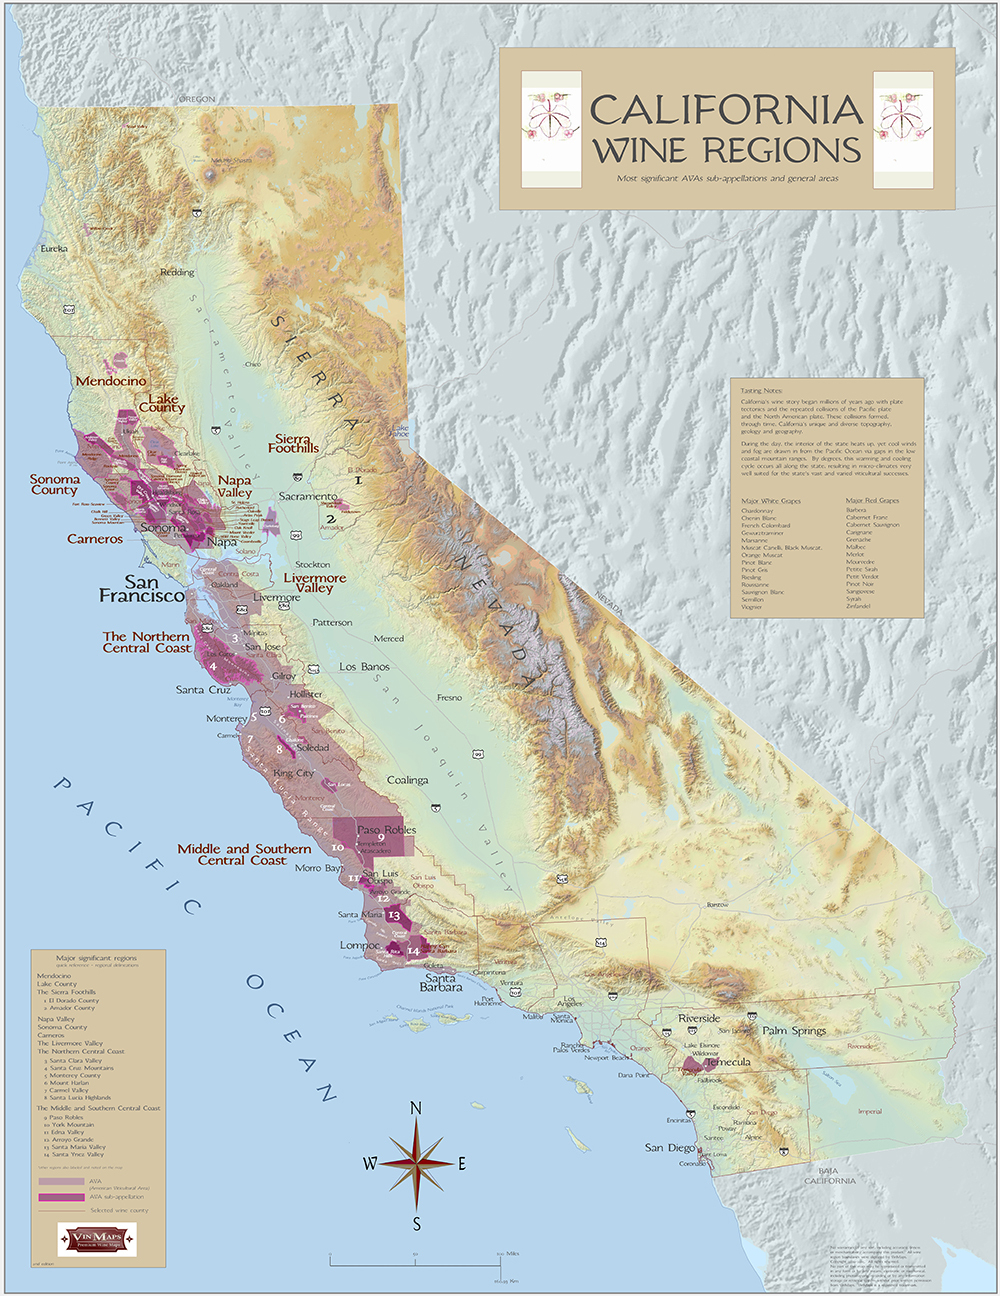 California Wine Regions - California Wine Map